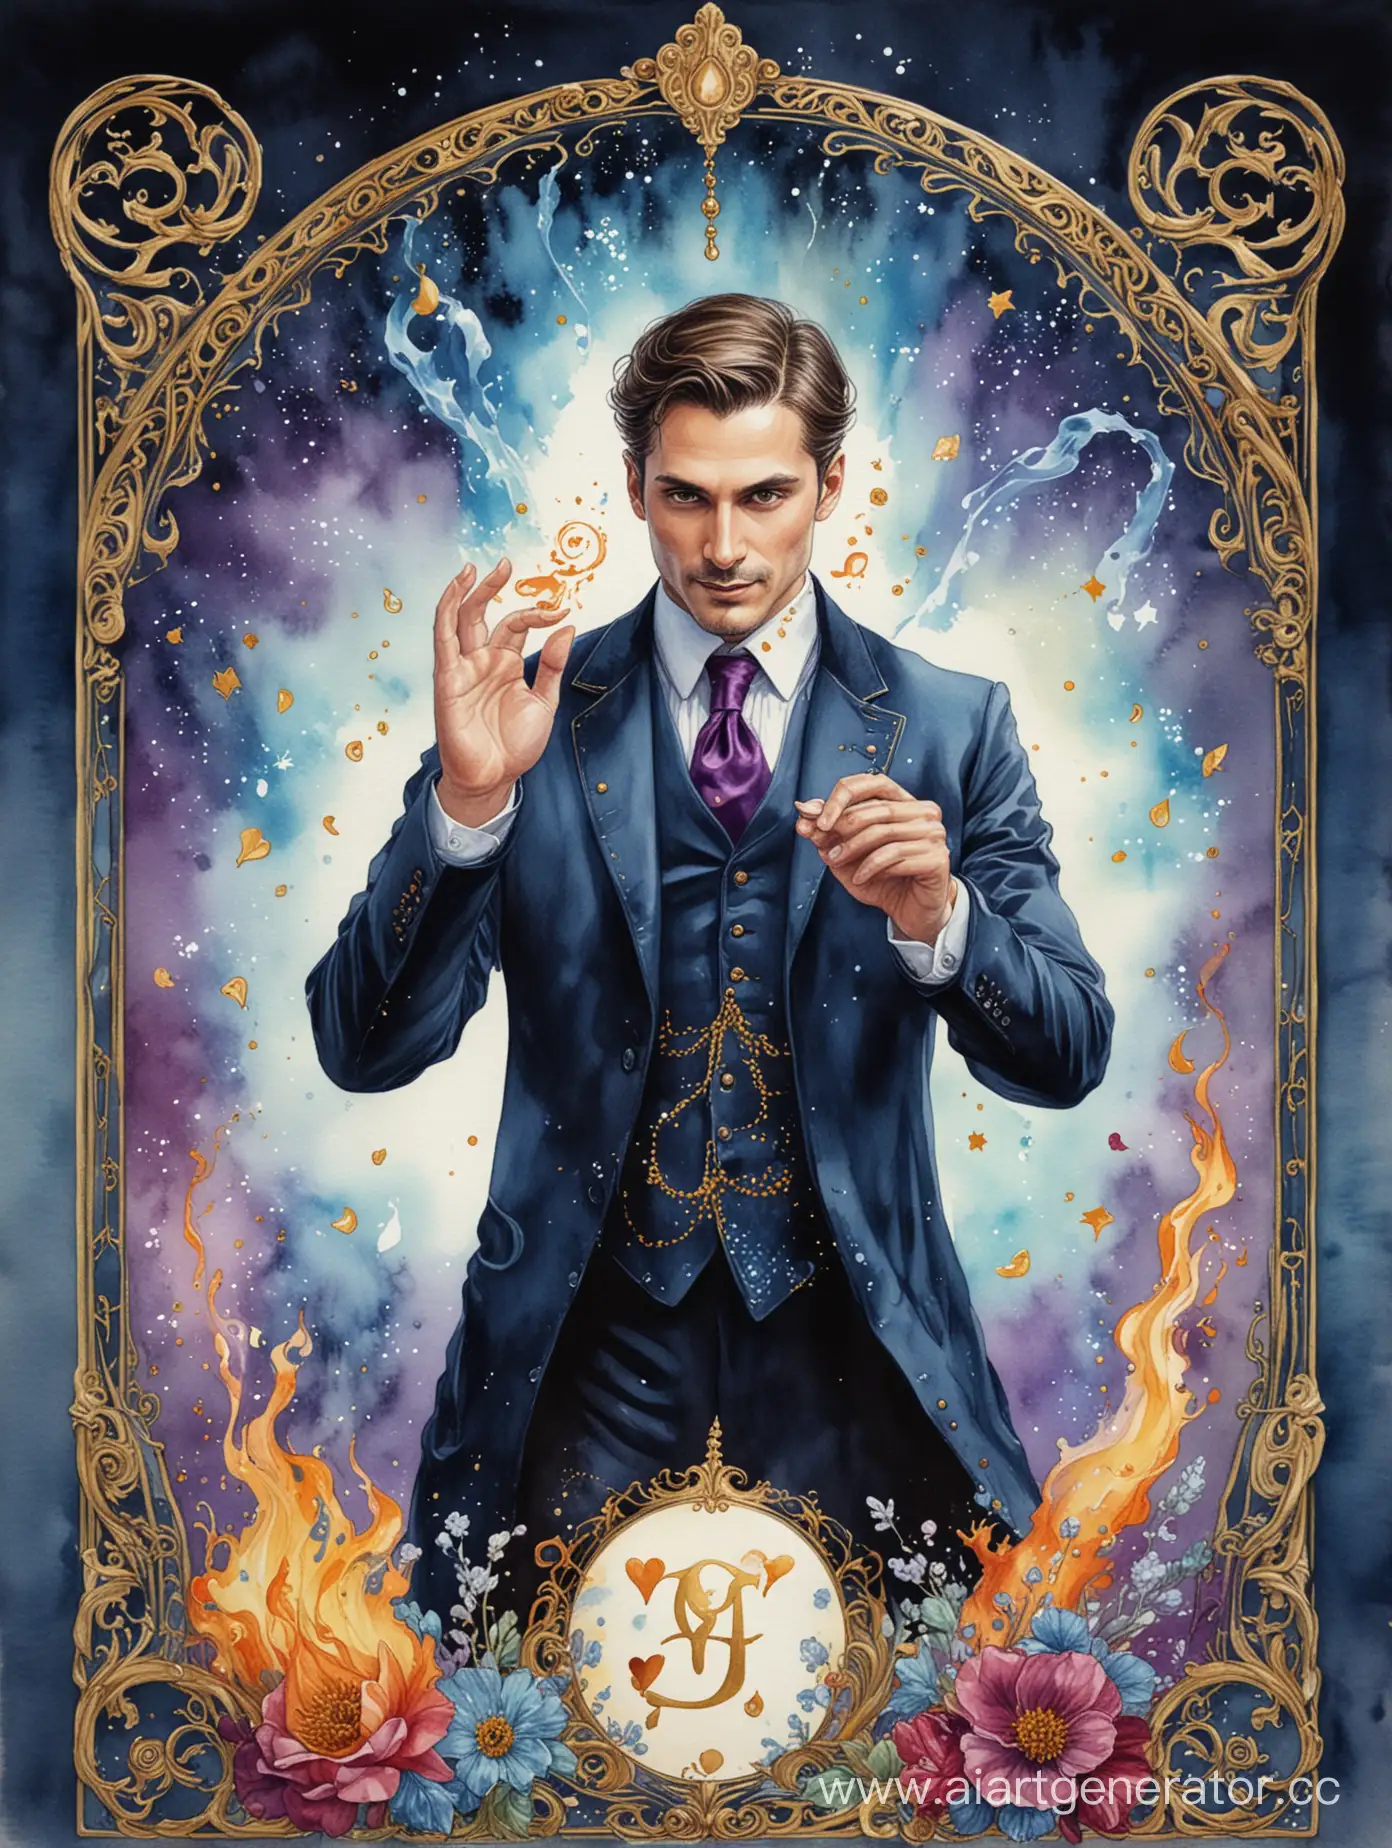 Watercolor-Tarot-Card-The-Magician-Performing-Infinite-Magic